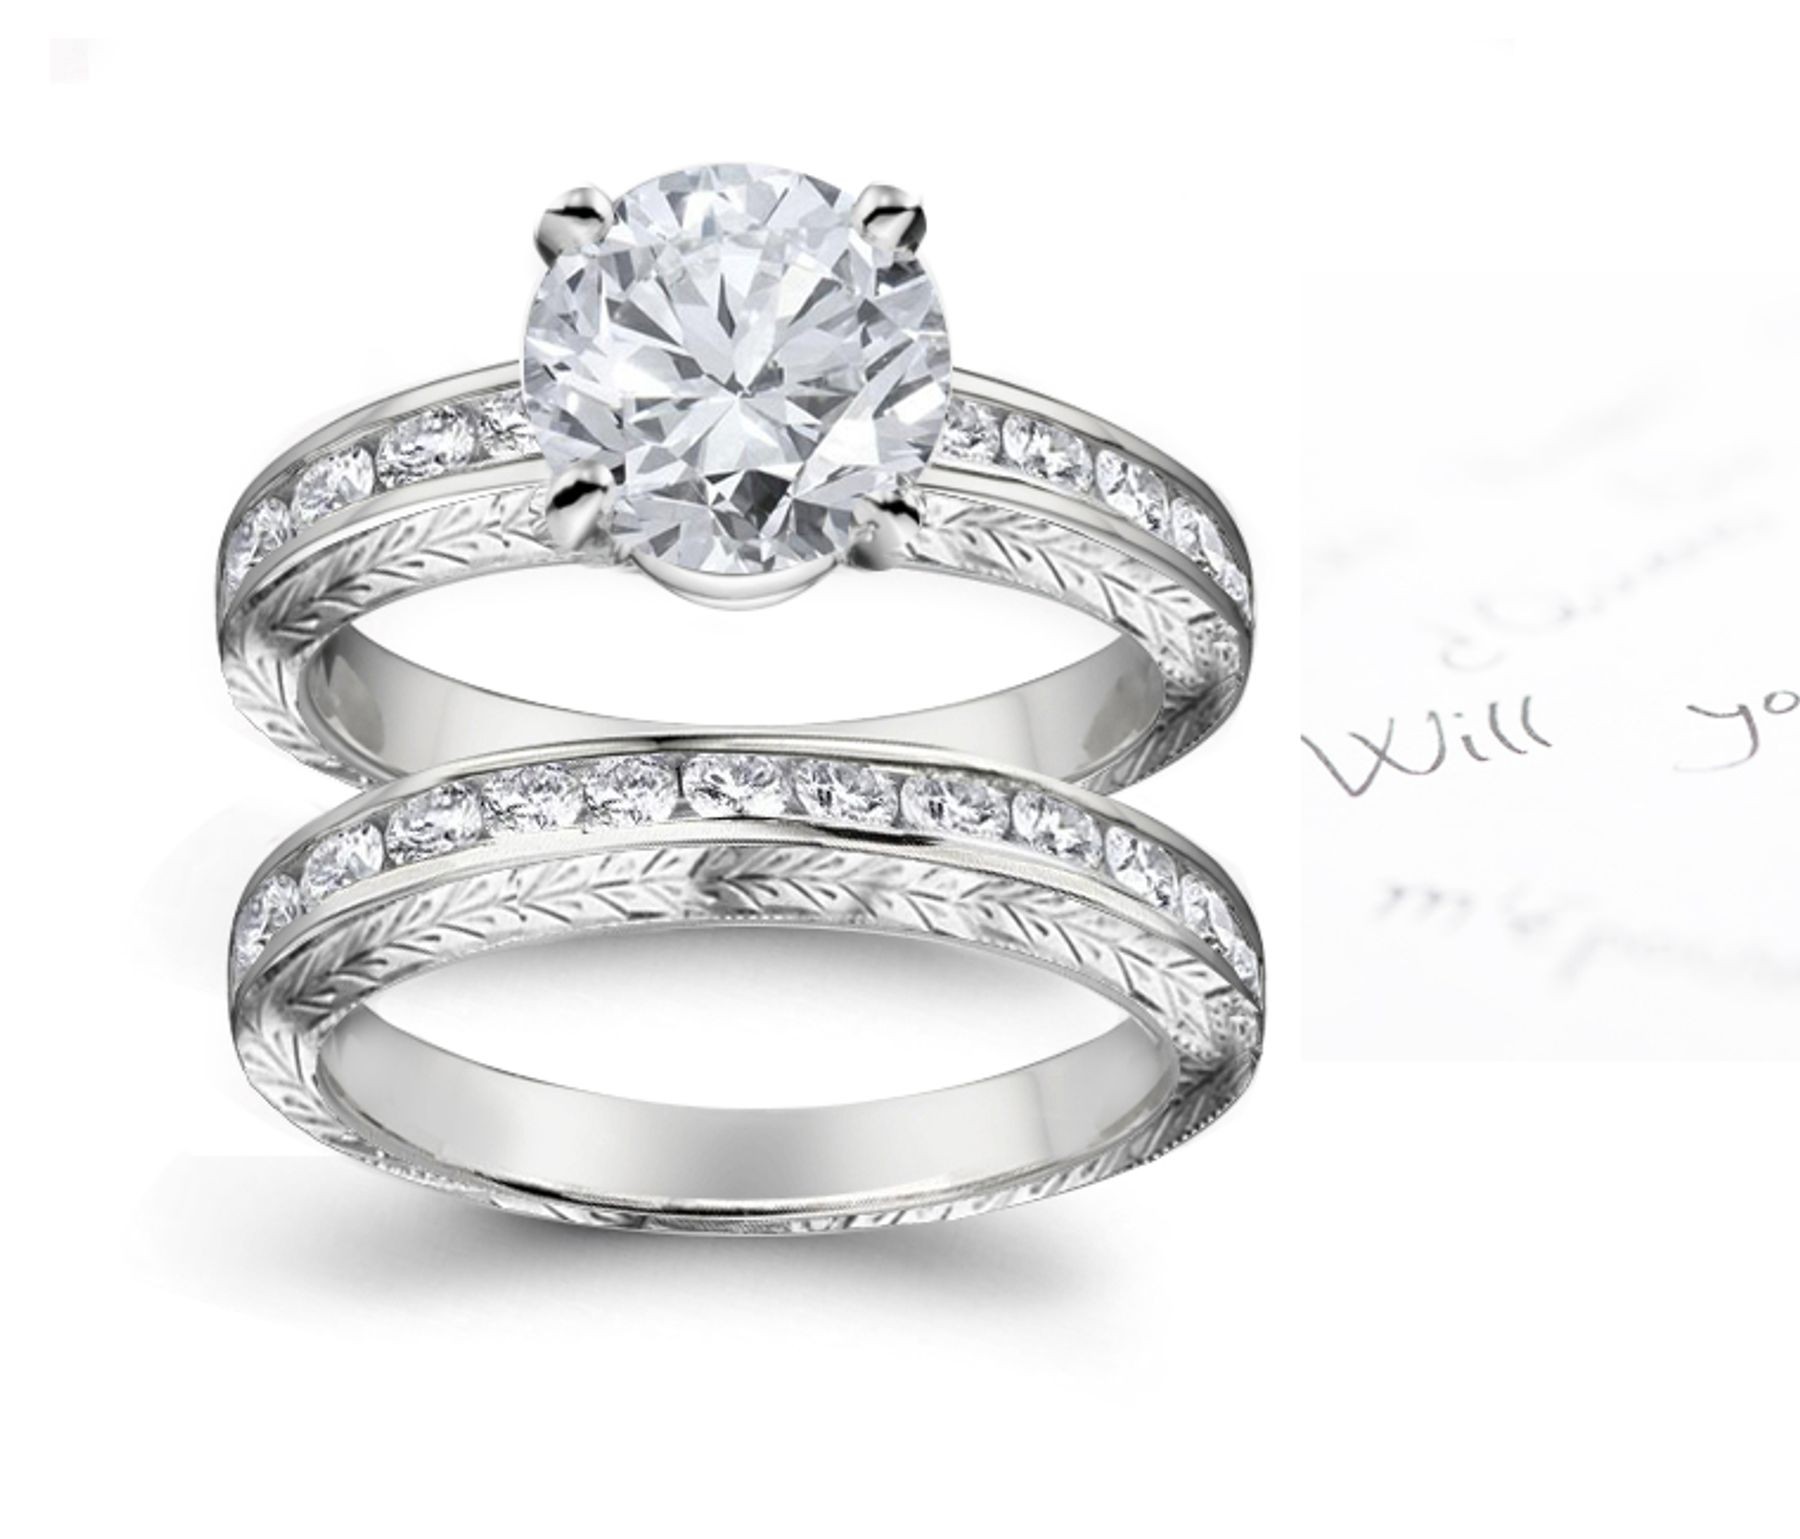 Antique Special Design Diamond Engagement & Wedding Floral Scrolls & Motifs Ring & Band in Platinum